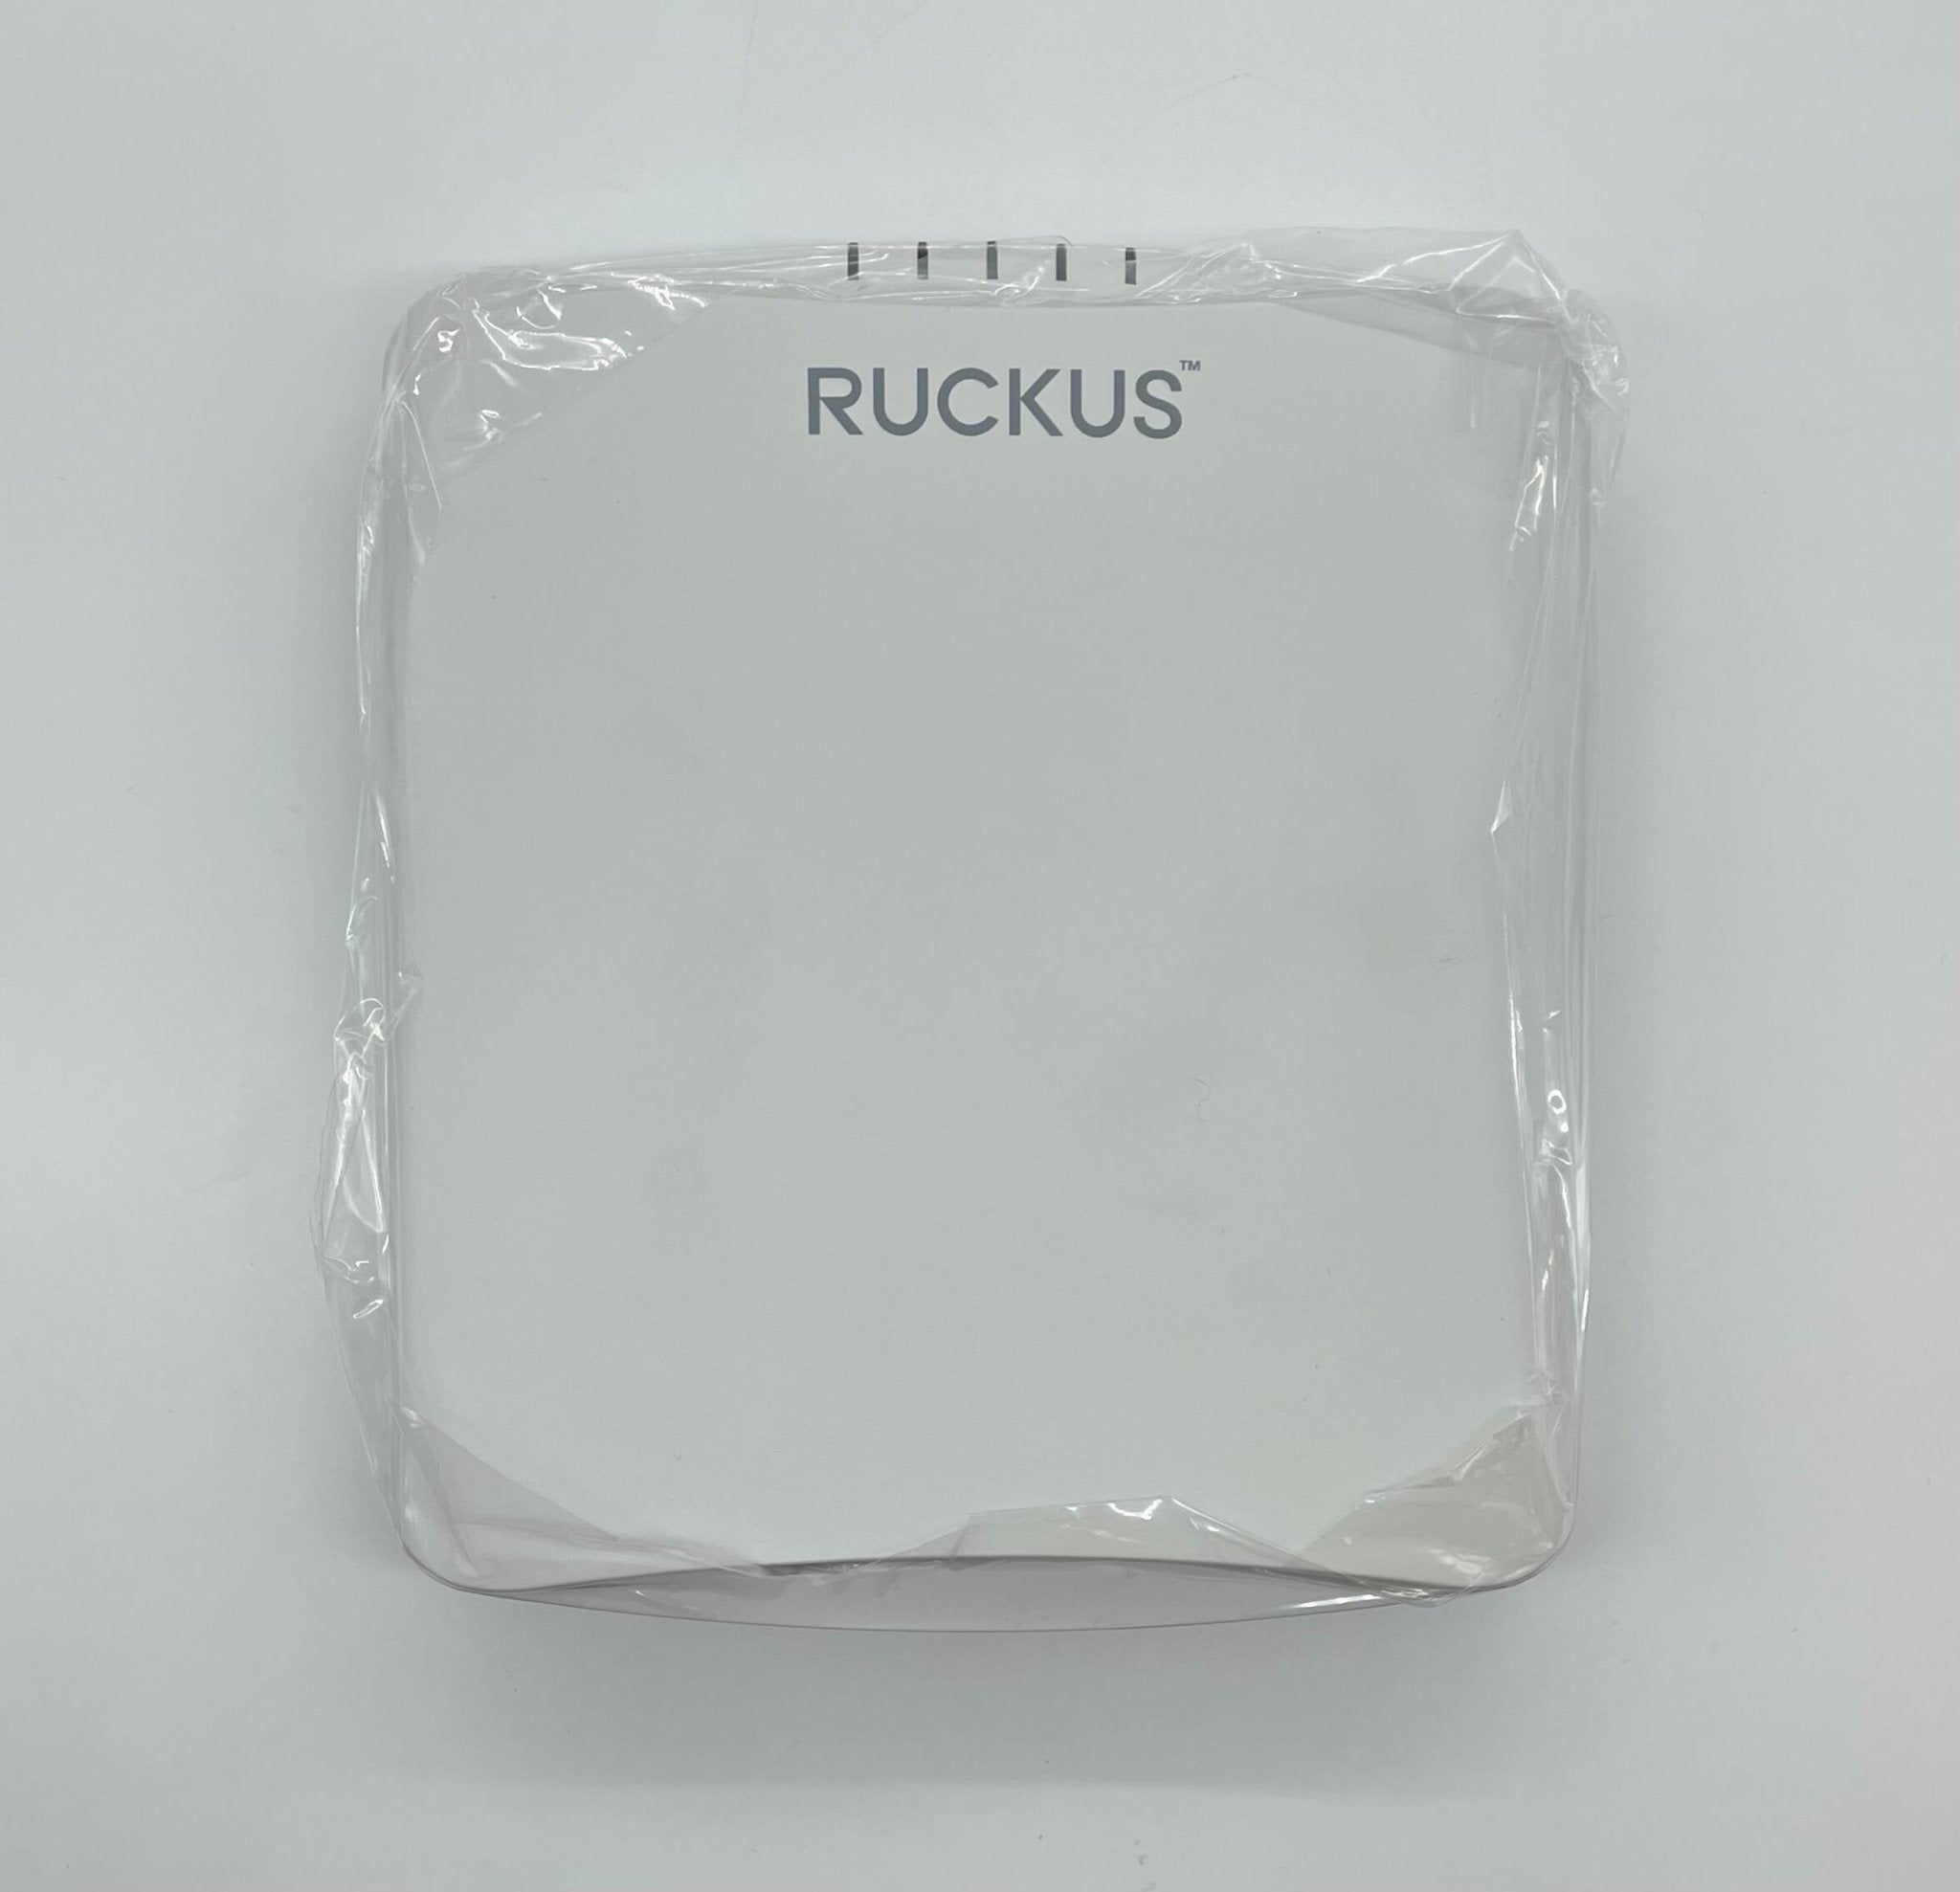 Ruckus R650 Wireless Access Point - The Fire Alarm Supplier